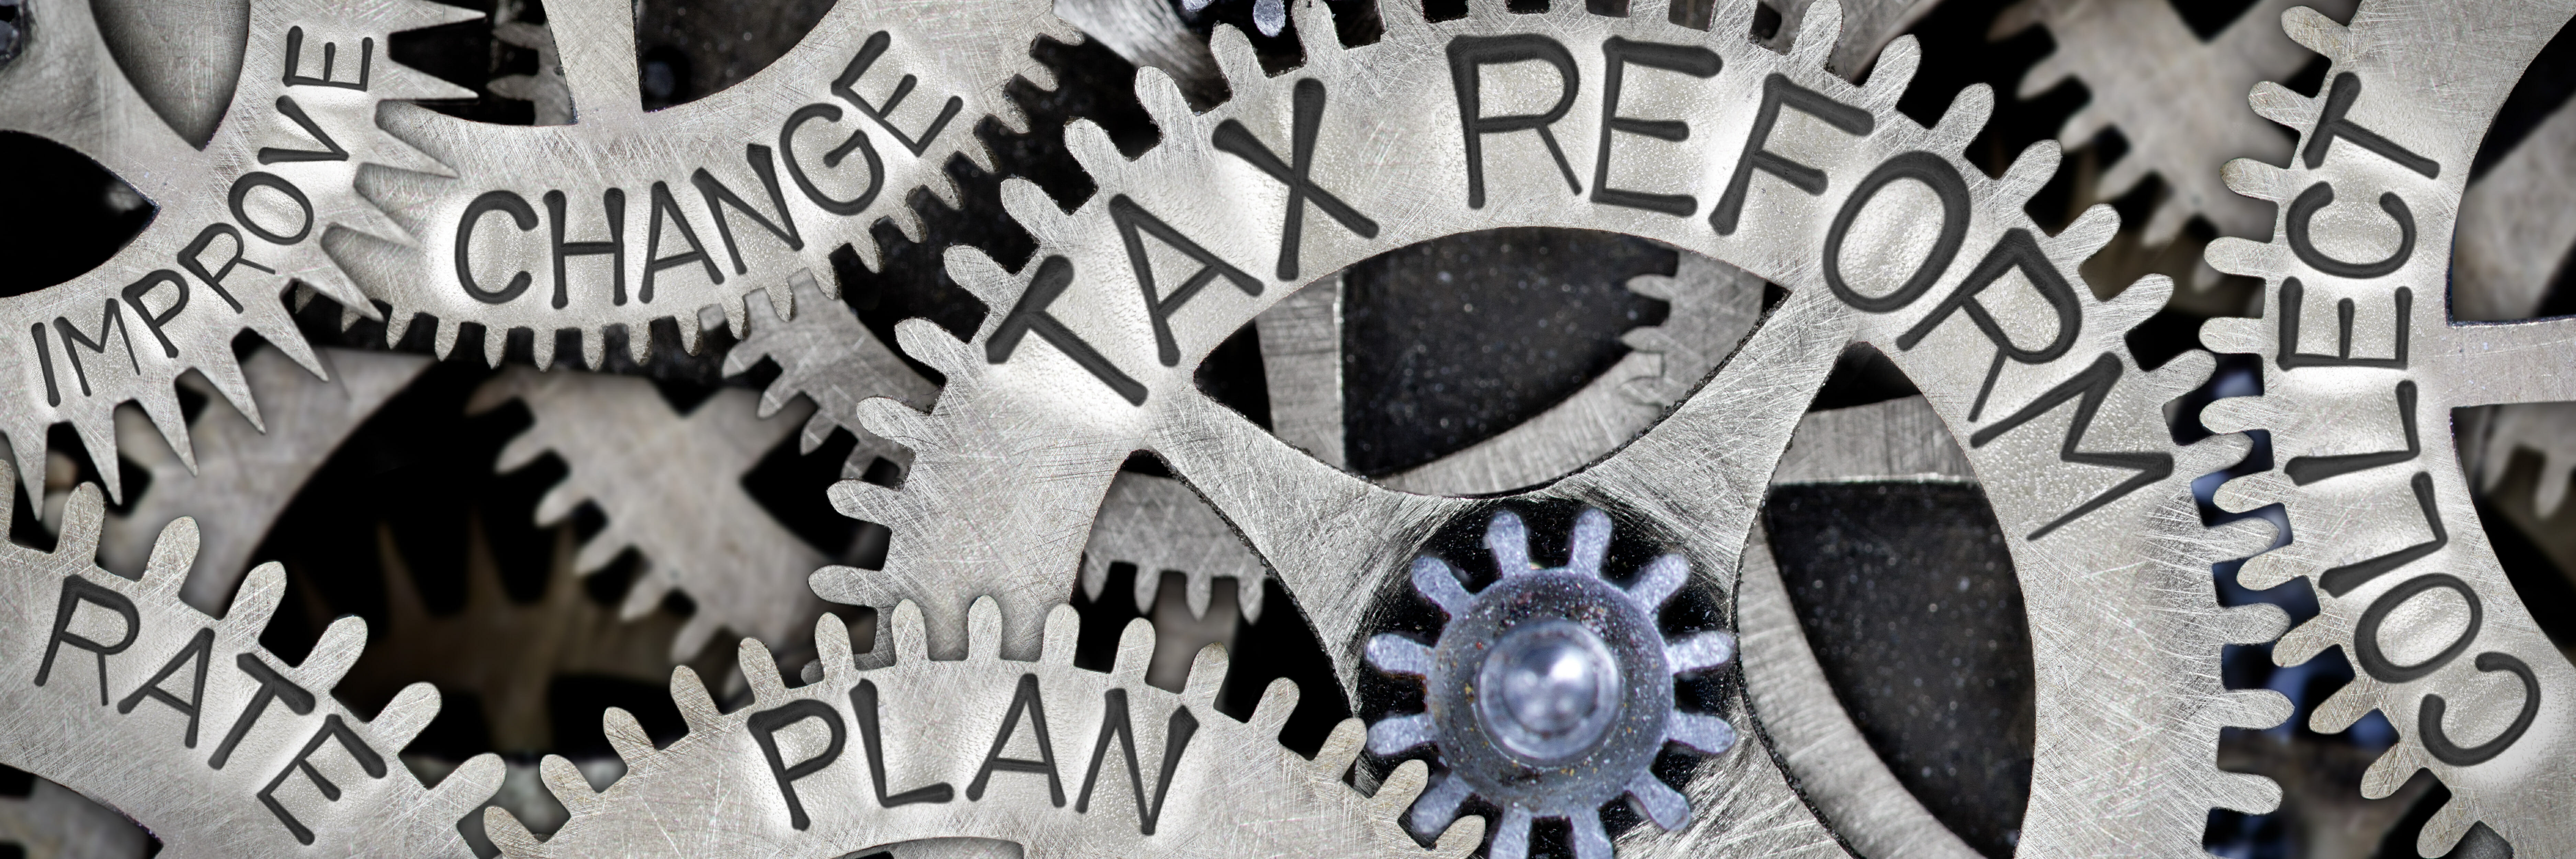 Tax reform considerations